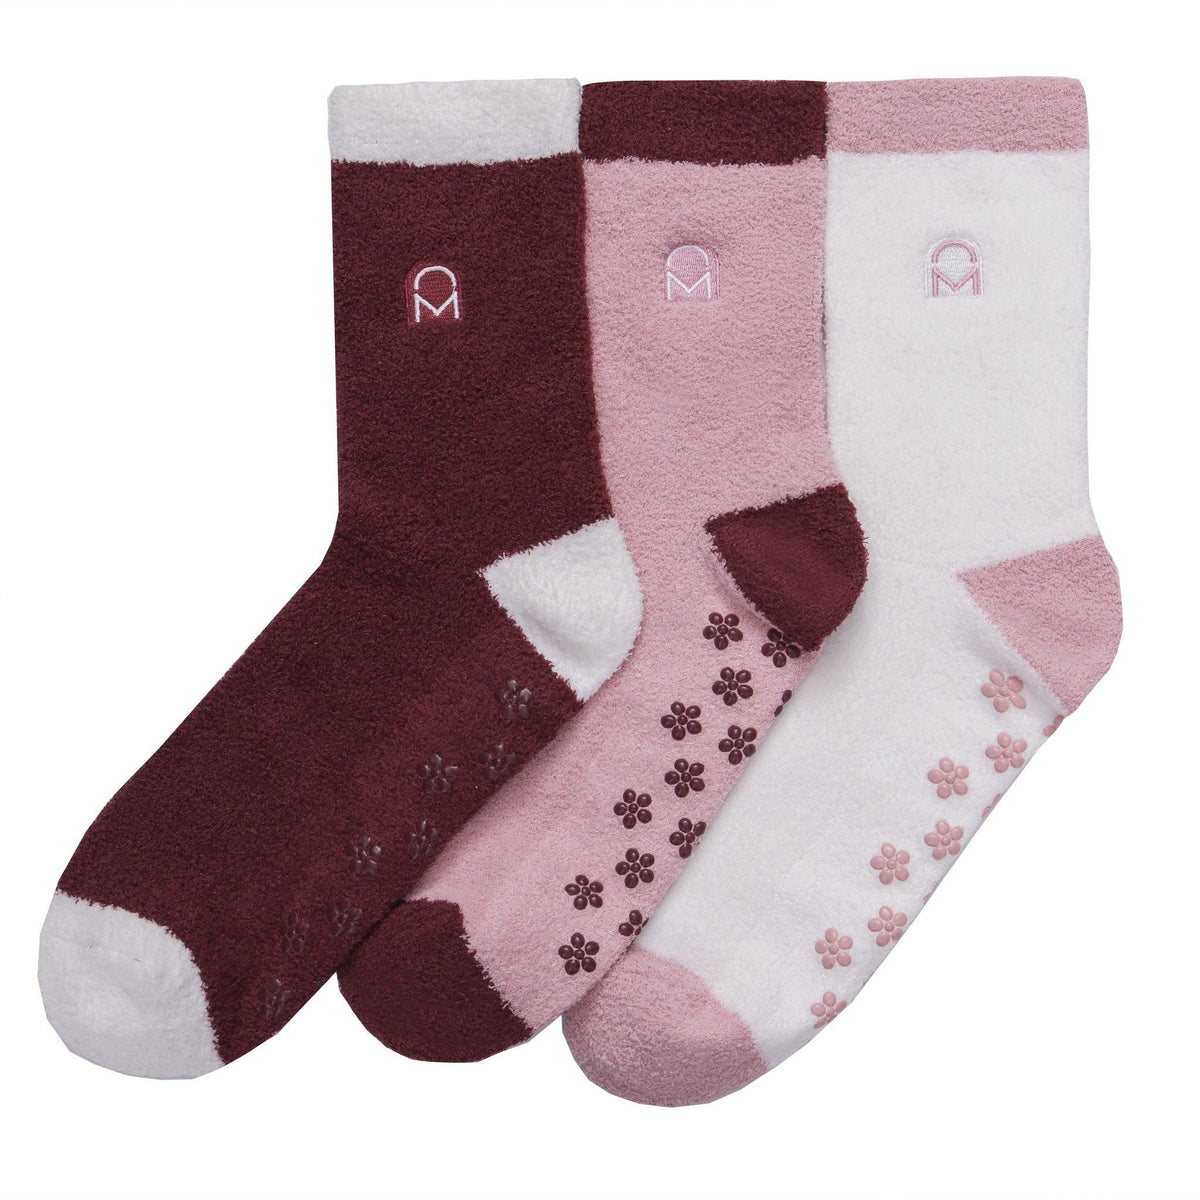 Women's Soft Anti-Skid Micro-Plush Winter Crew Socks - Set C5